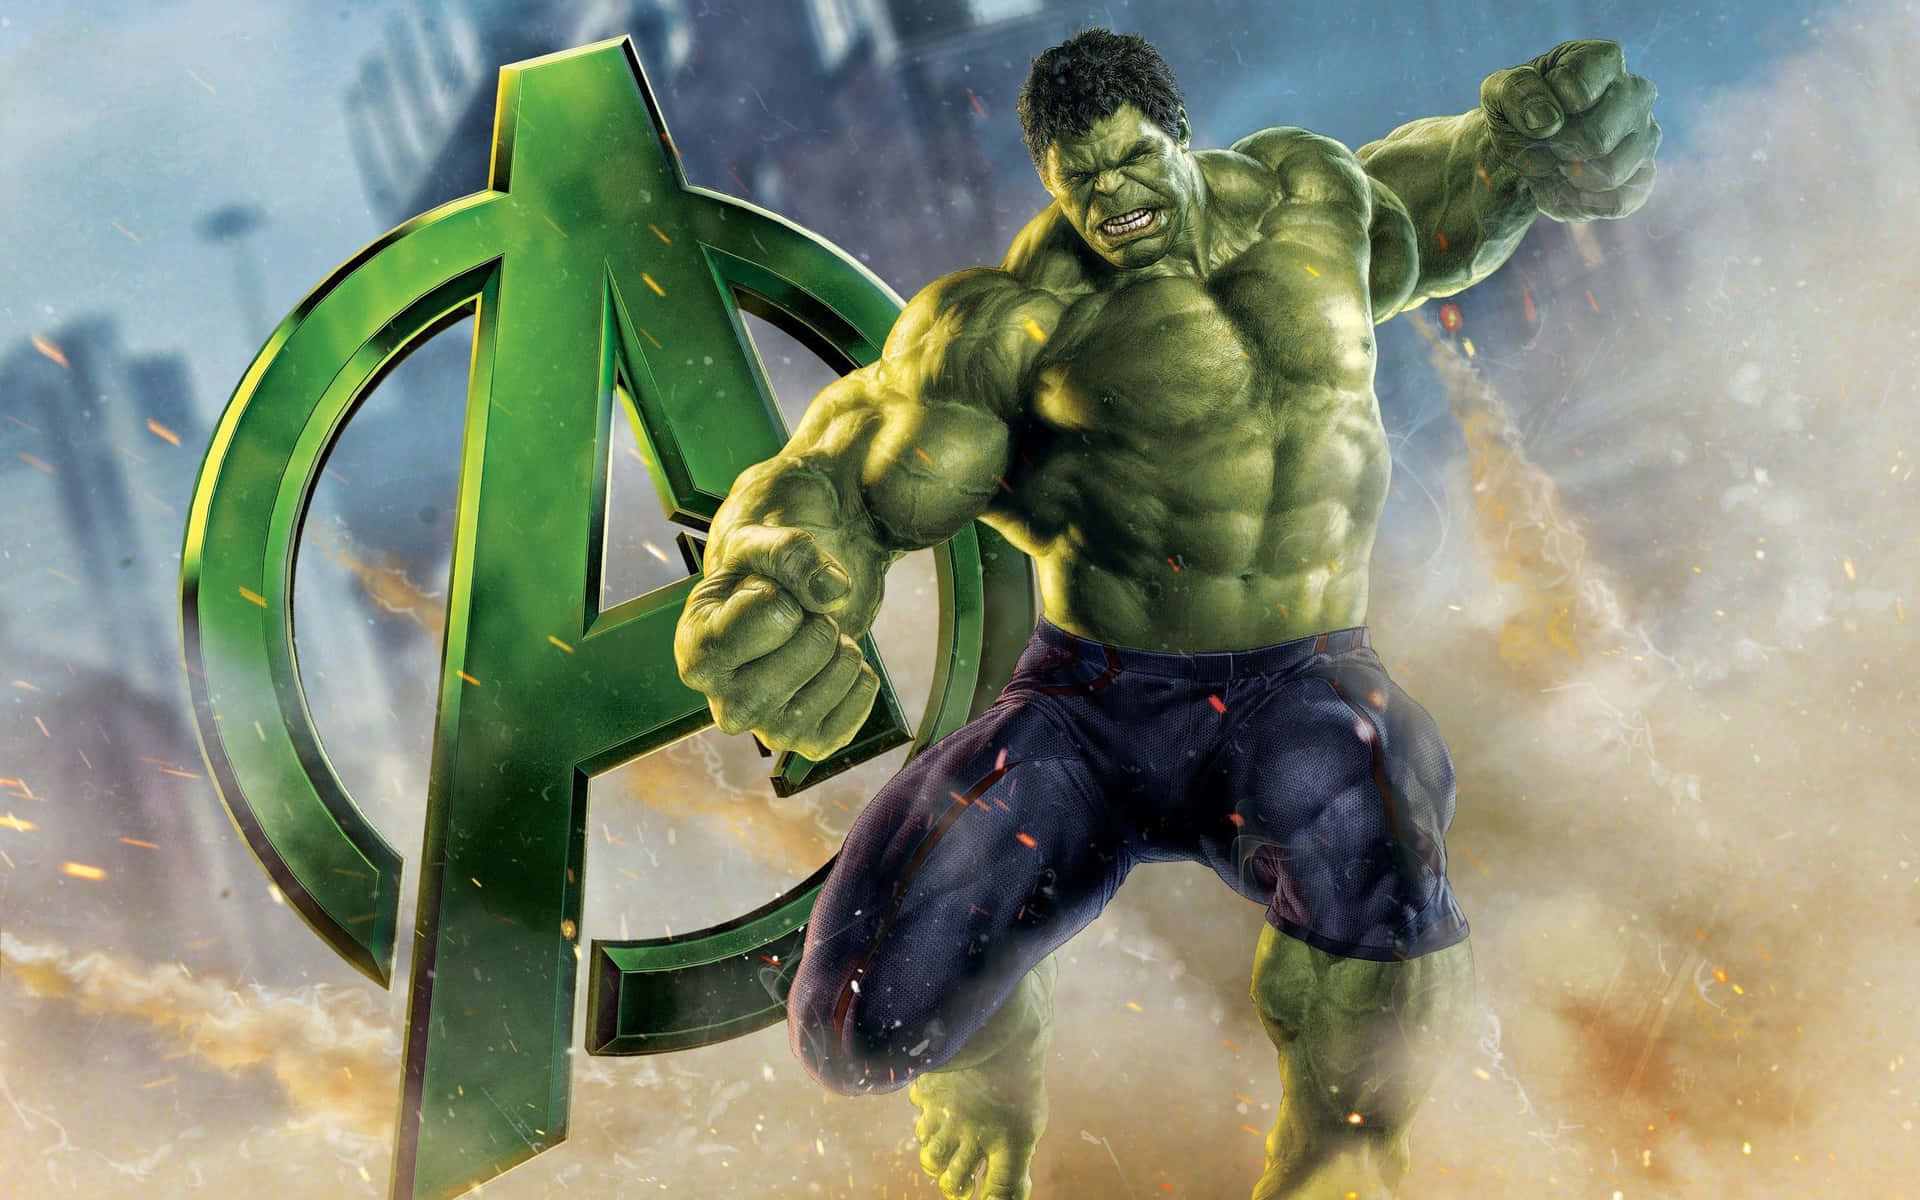 Hulkstår Trotsigt Tå Mot Tå Med En Hög Mekanisk Fiende På Datorn Eller Mobilens Bakgrundsbild.